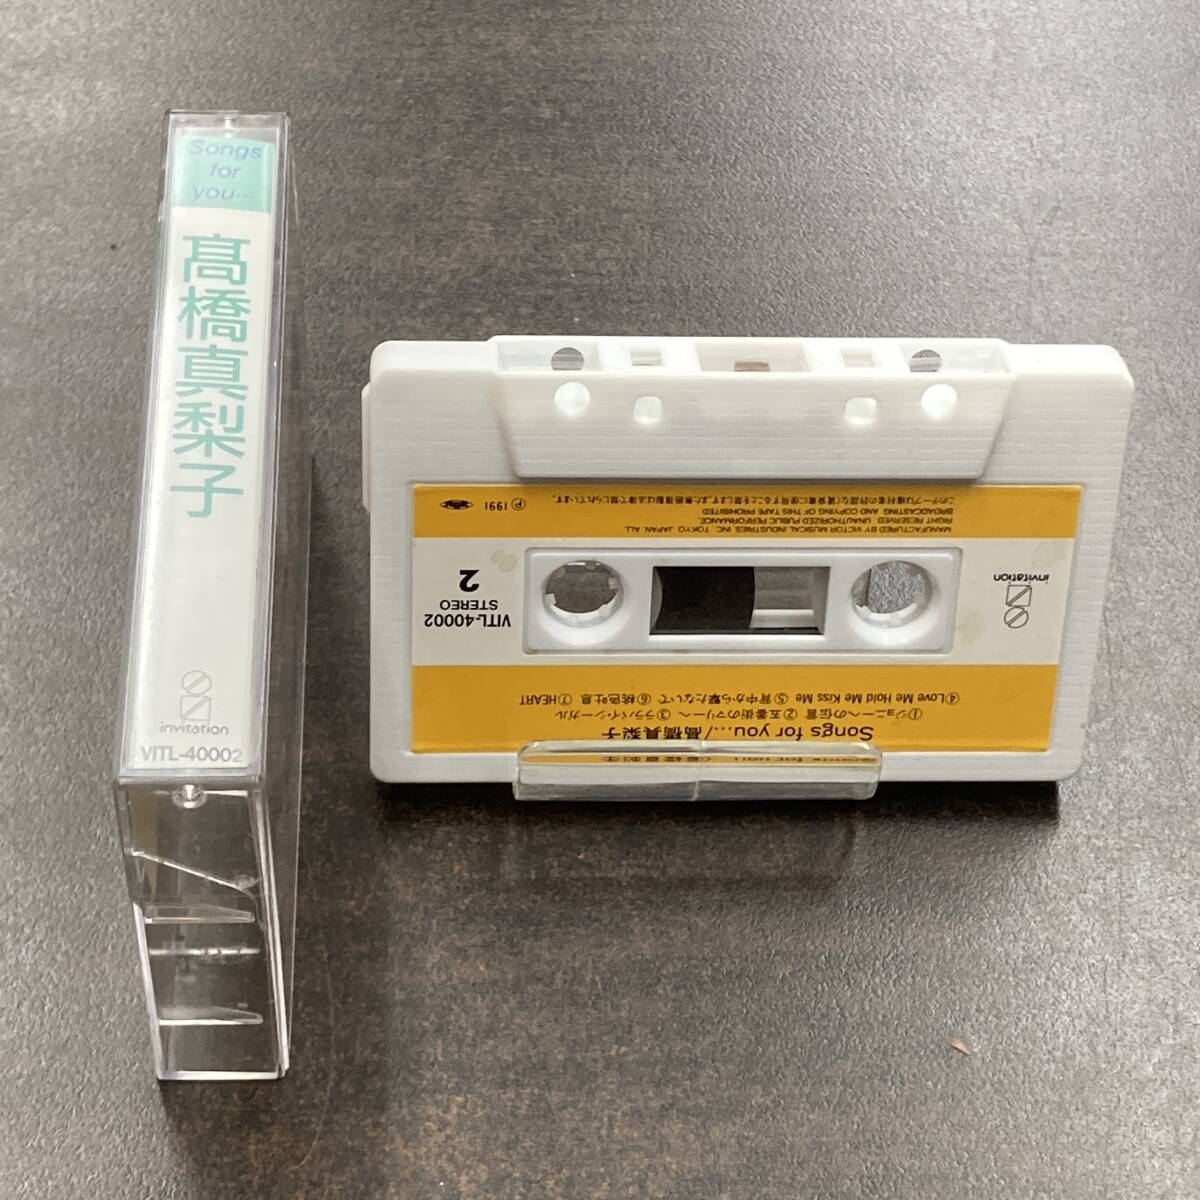 1080M 高橋真梨子 Songs for you カセットテープ / Mariko Takahashi Citypop Cassette Tapeの画像3